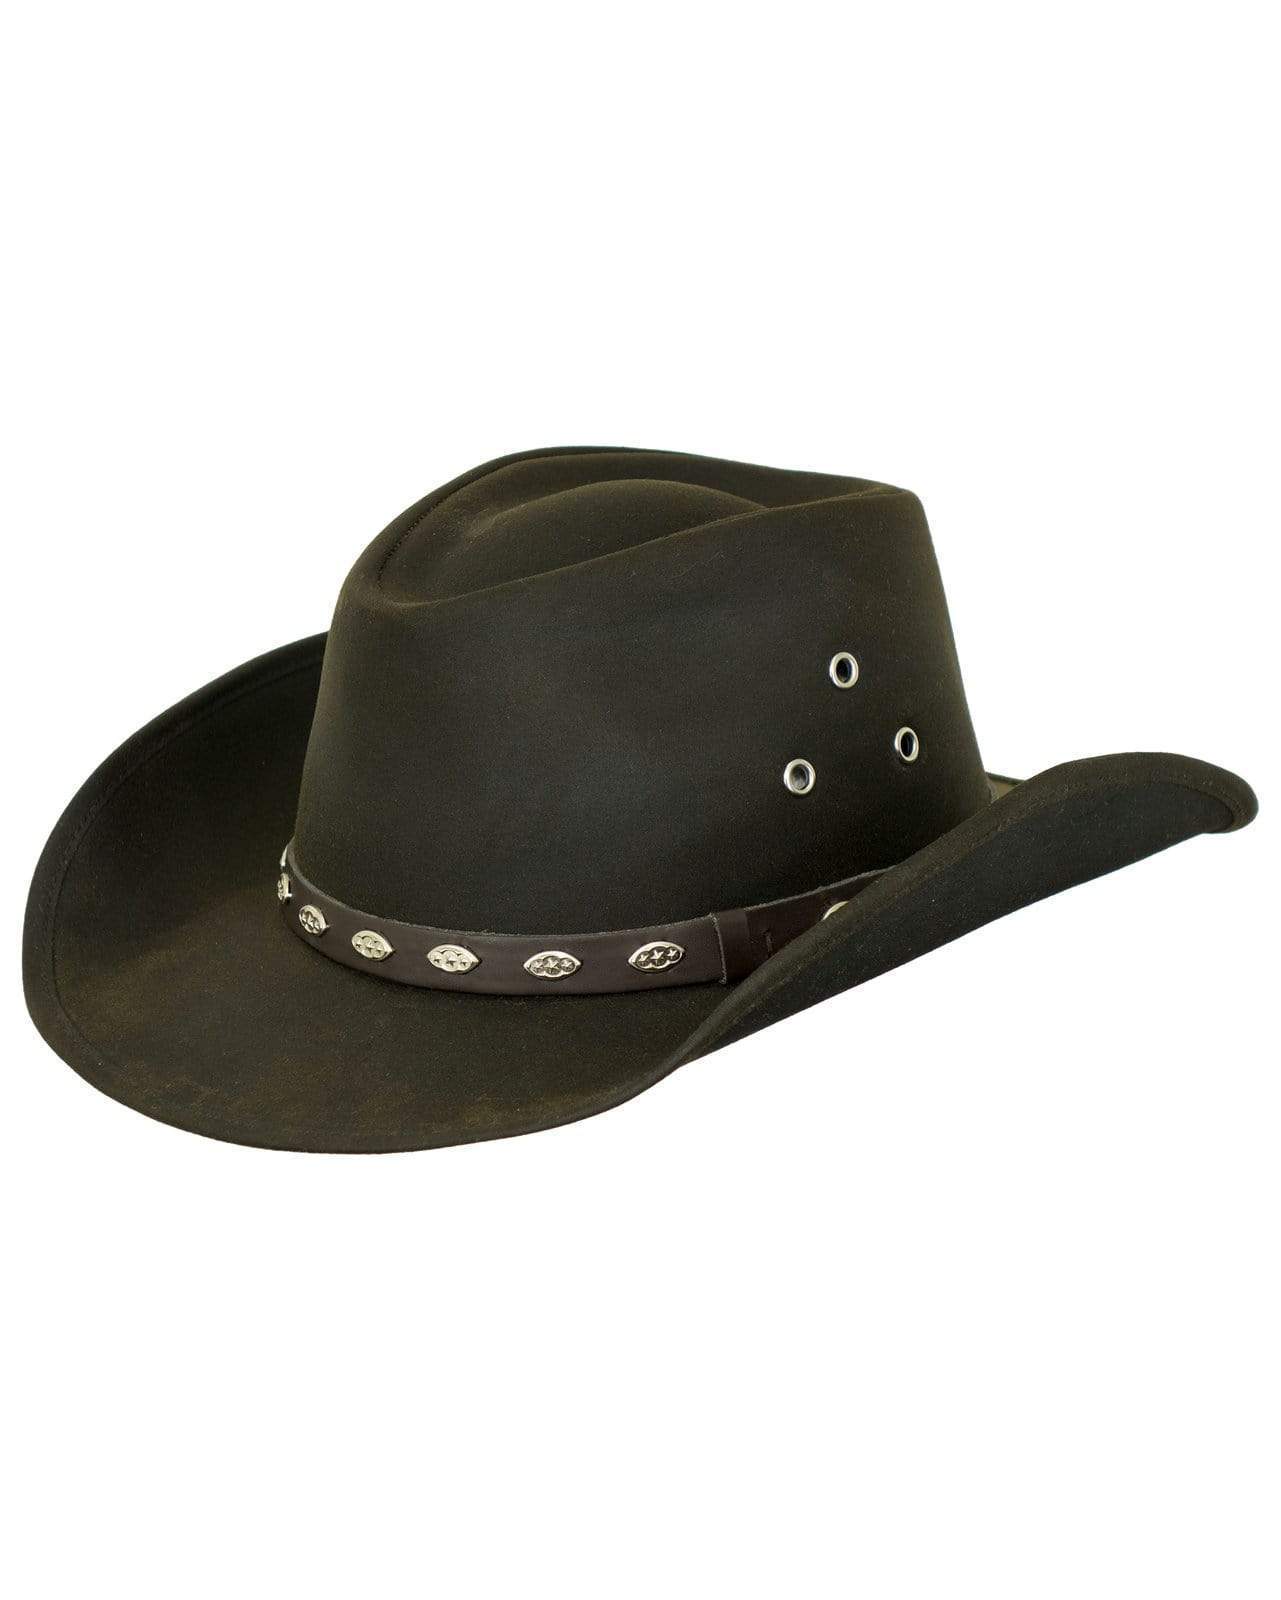 Badlands | Oilskin Hats Outback Trading Company | OutbackTrading.com